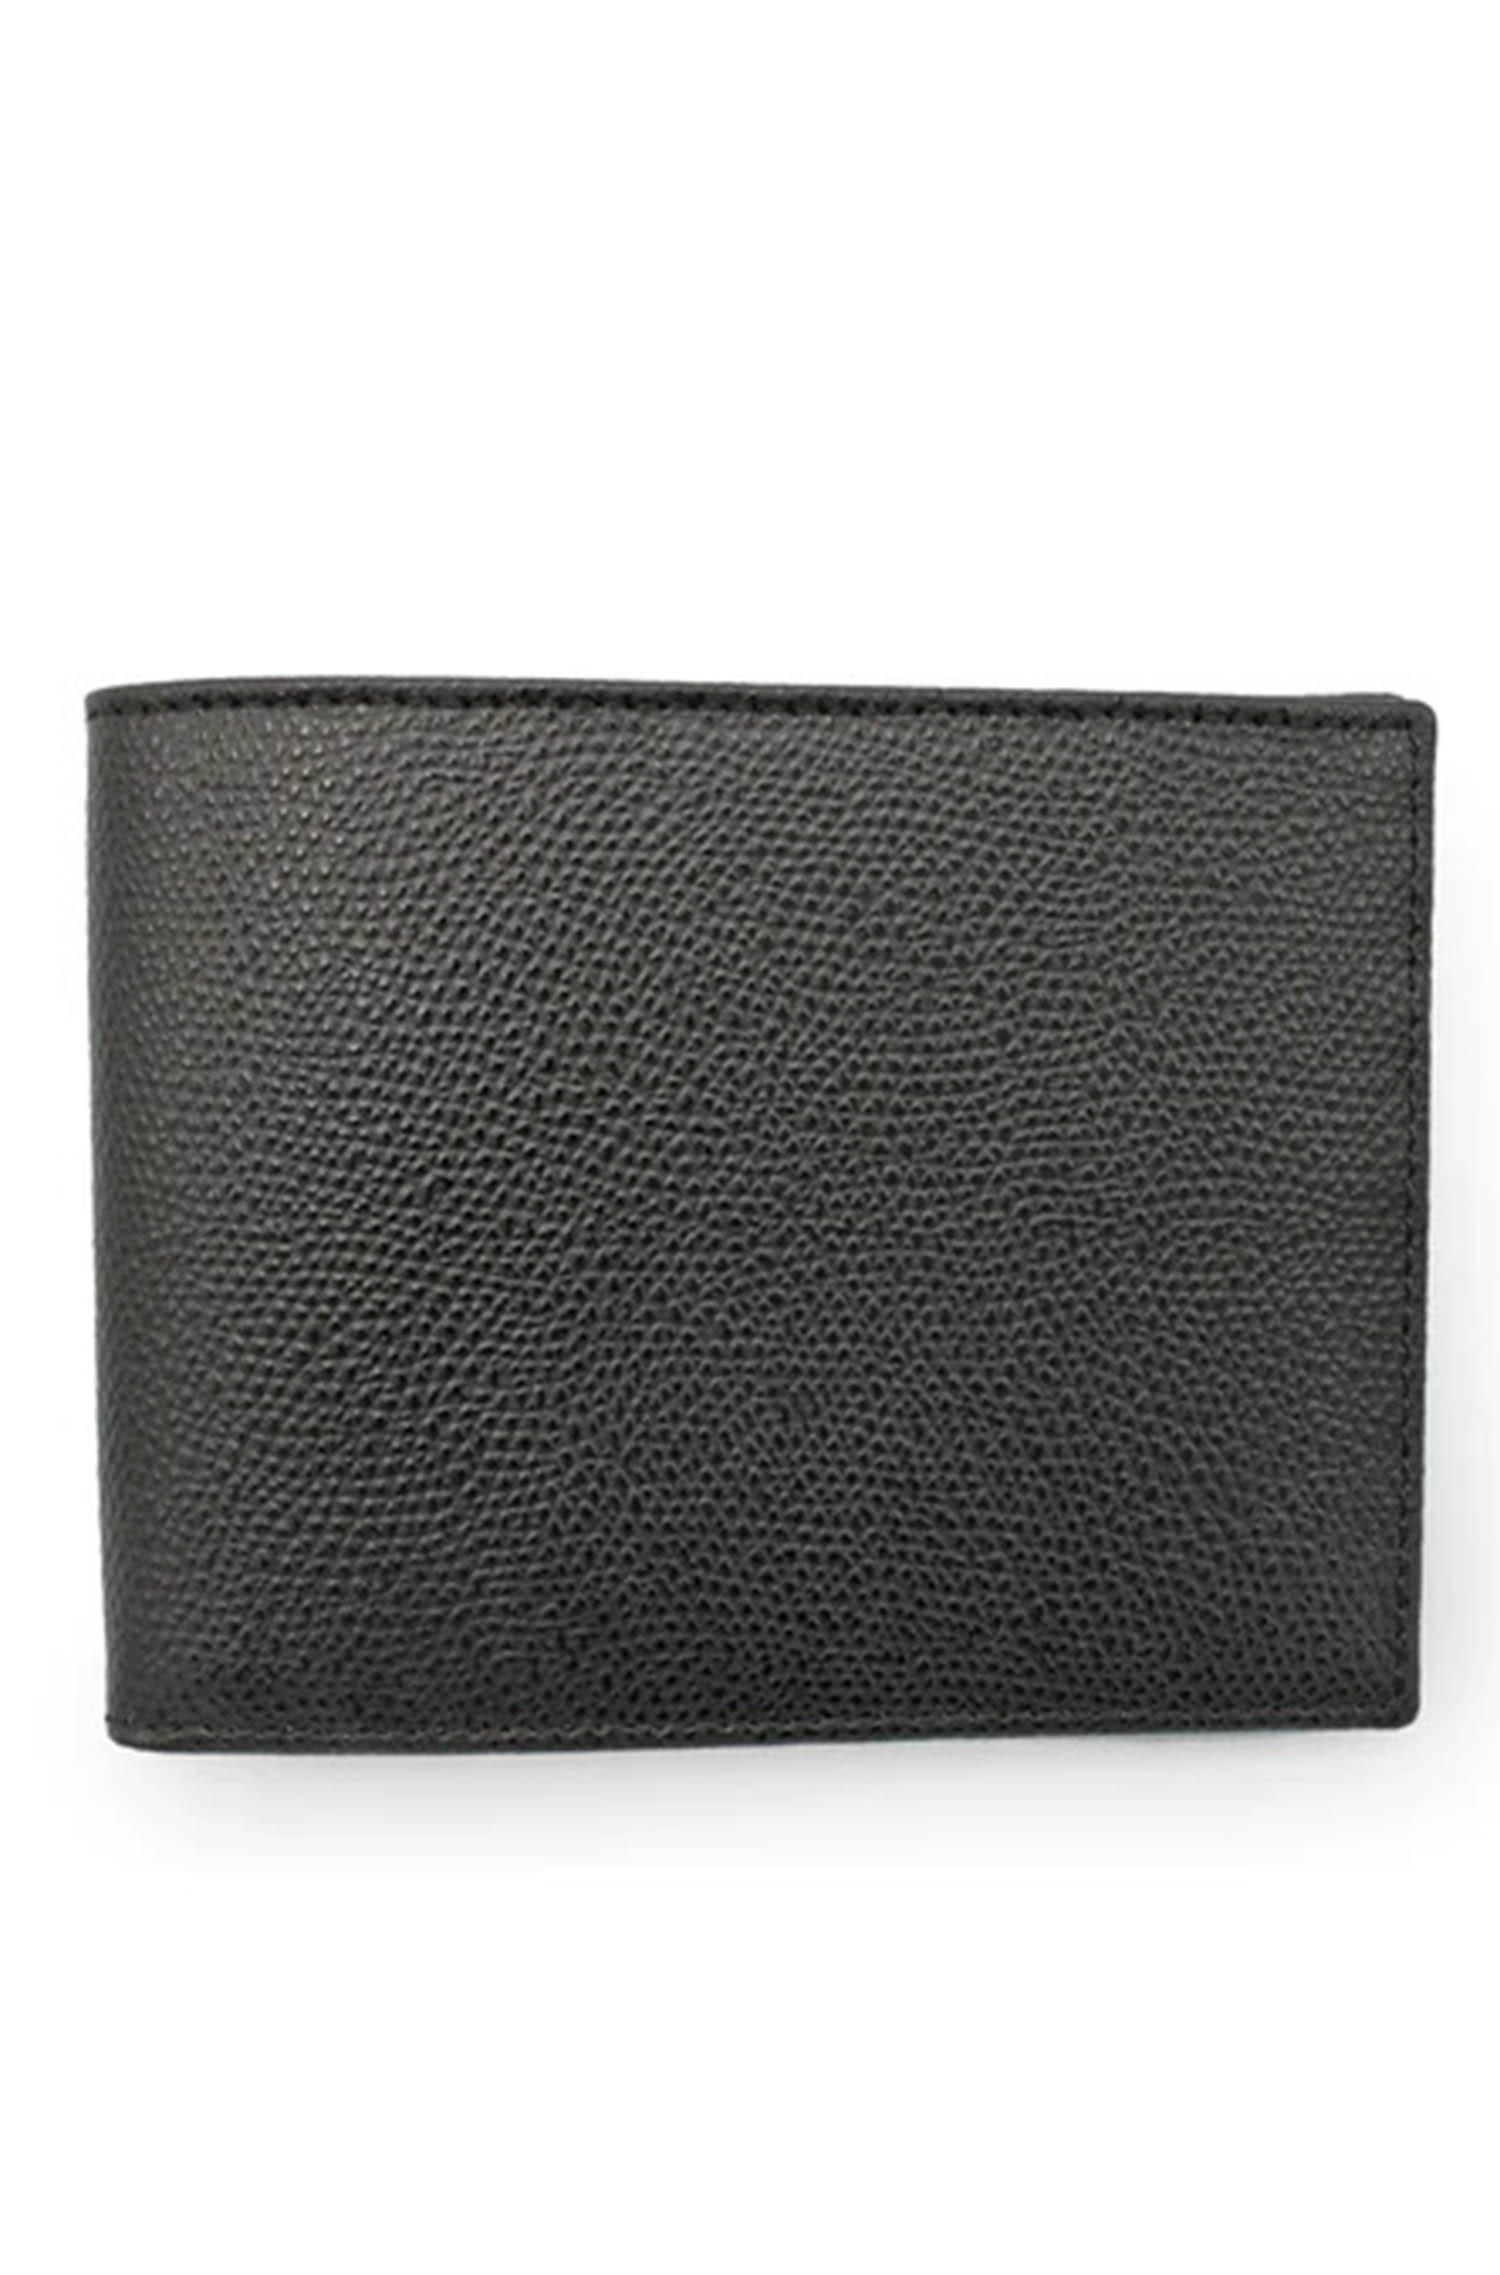 ELLIOT RHODES - COVENT GARDEN Grained Leather Billfold Wallet in Black AC-COV200